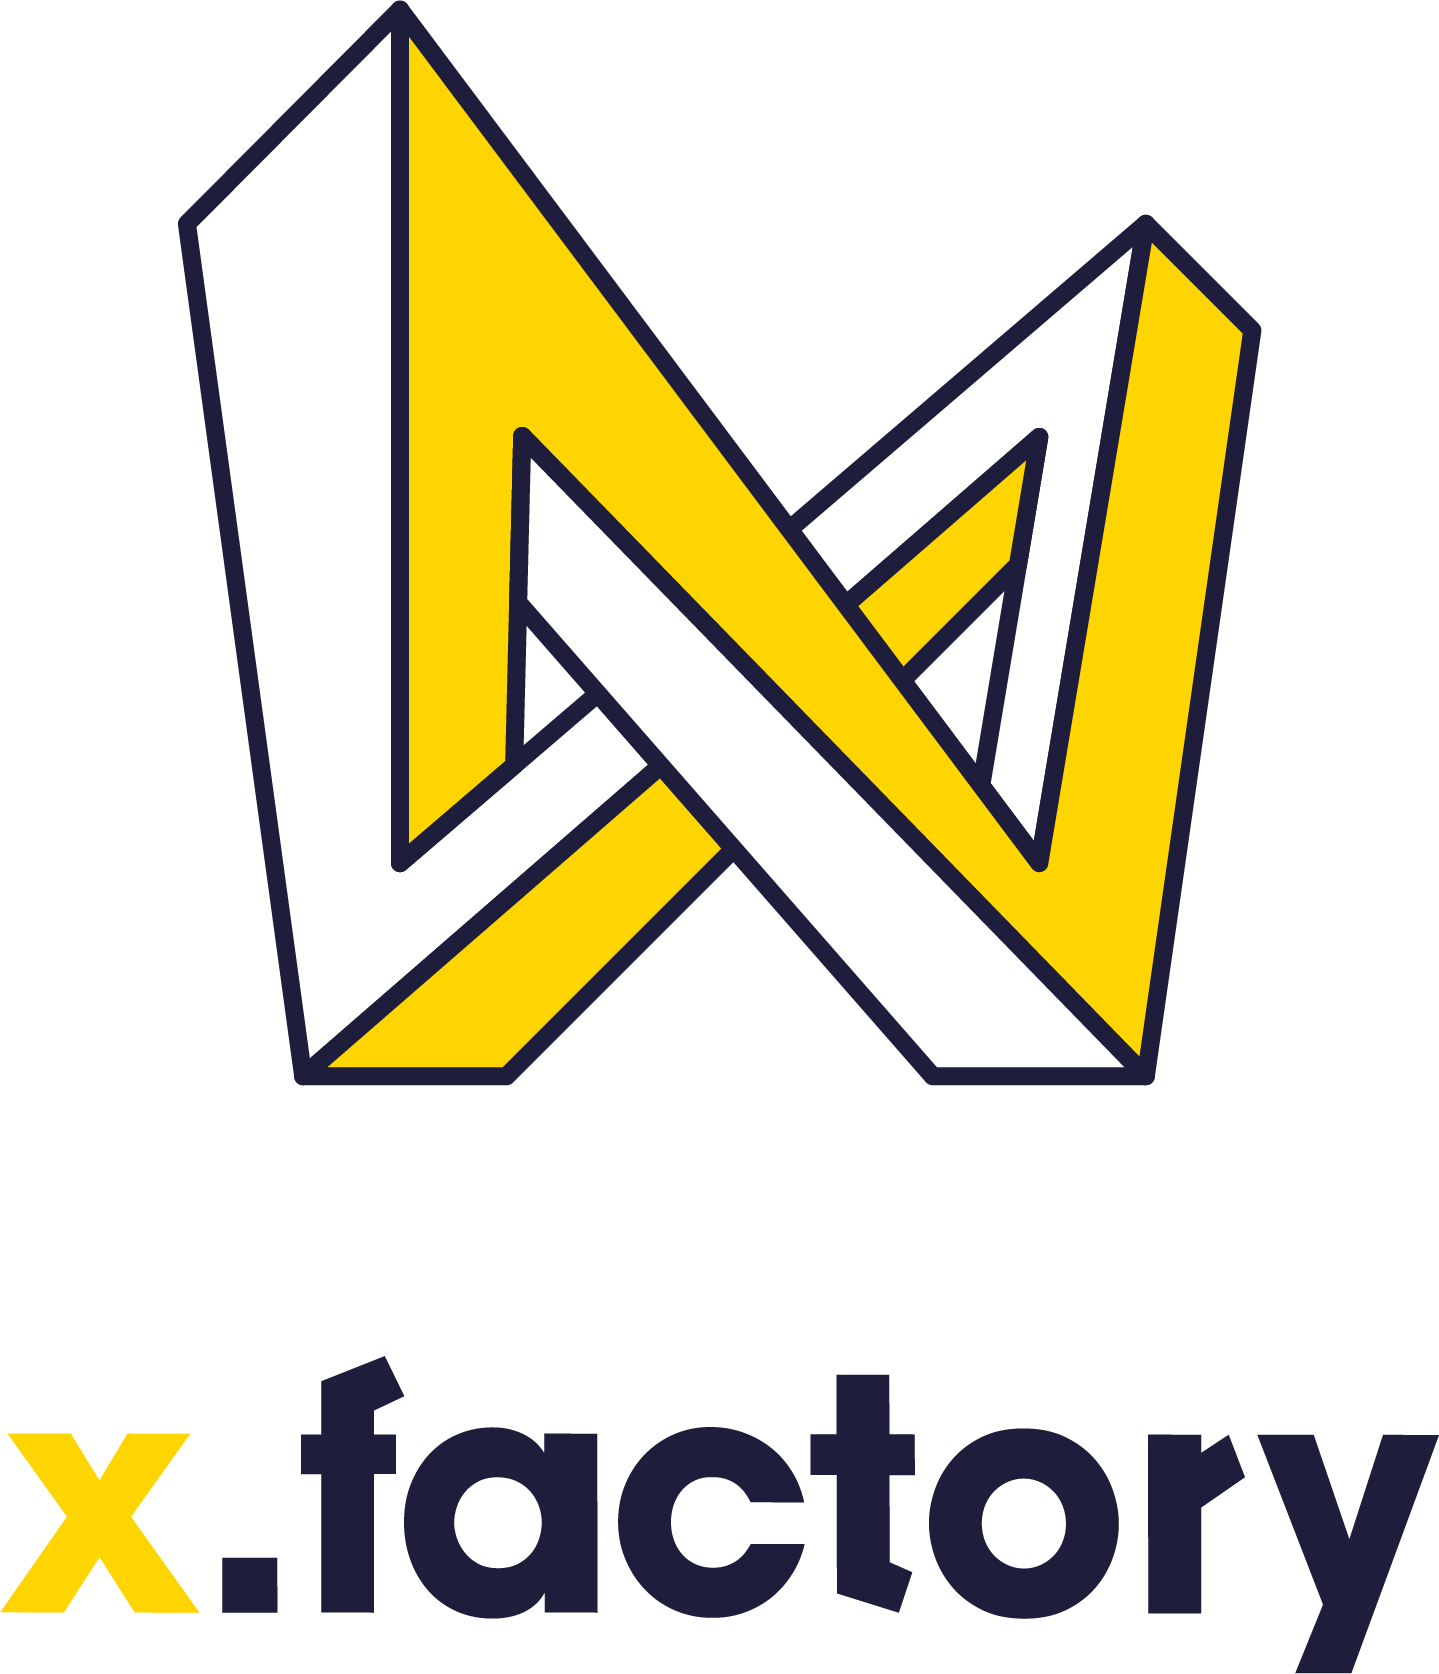 X.factory logo.jpg